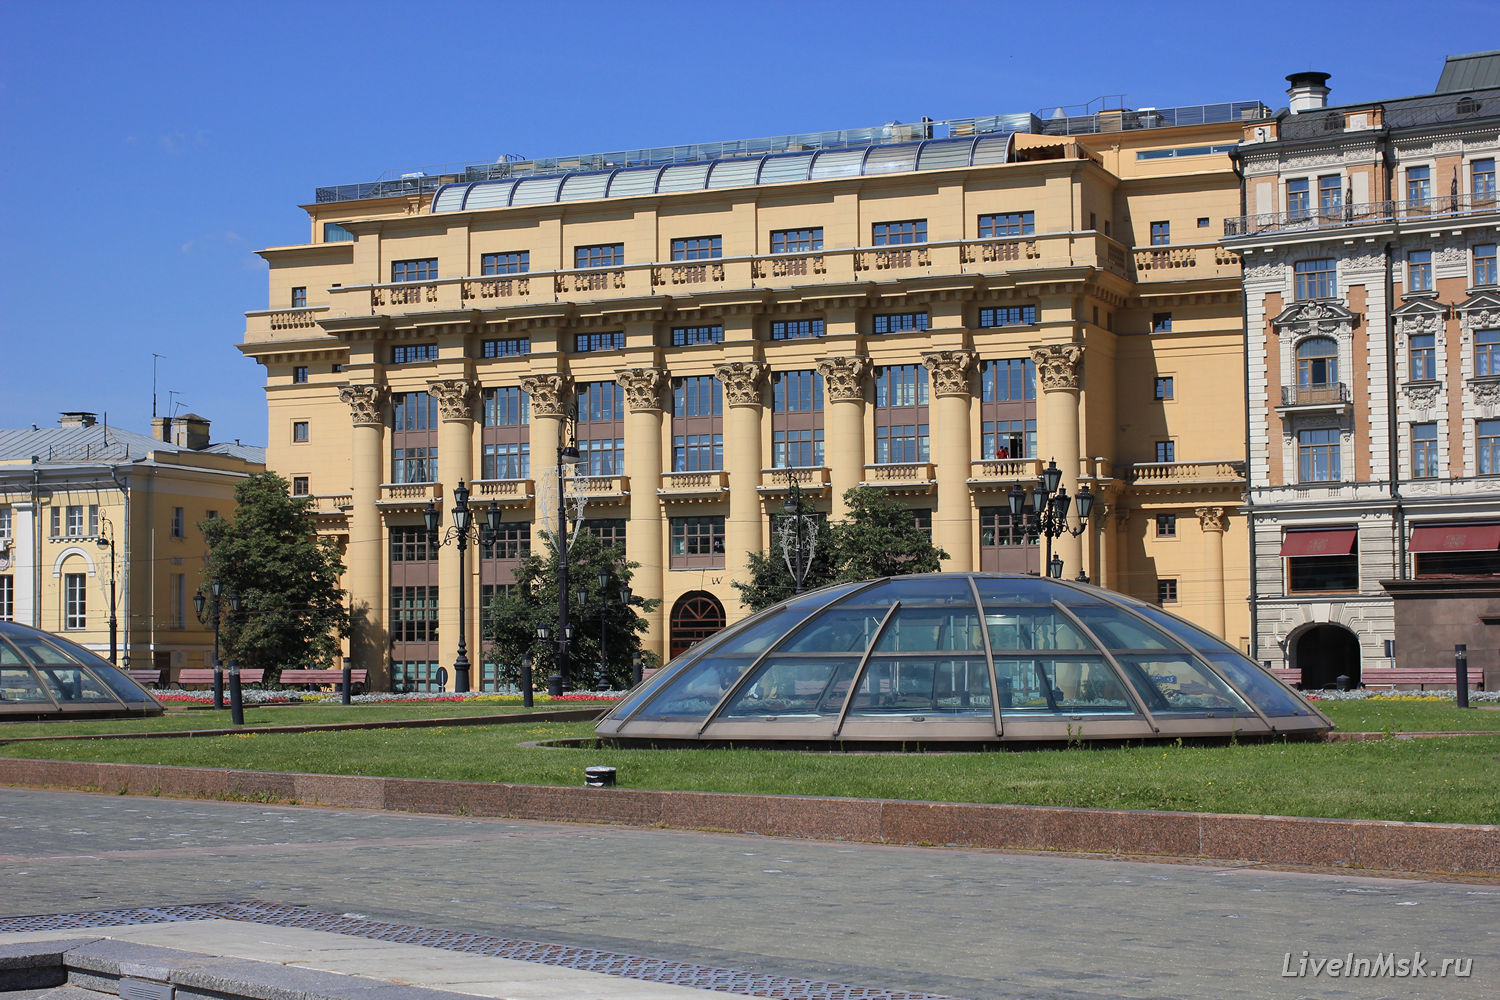 Манежная площадь, фото 2015 года